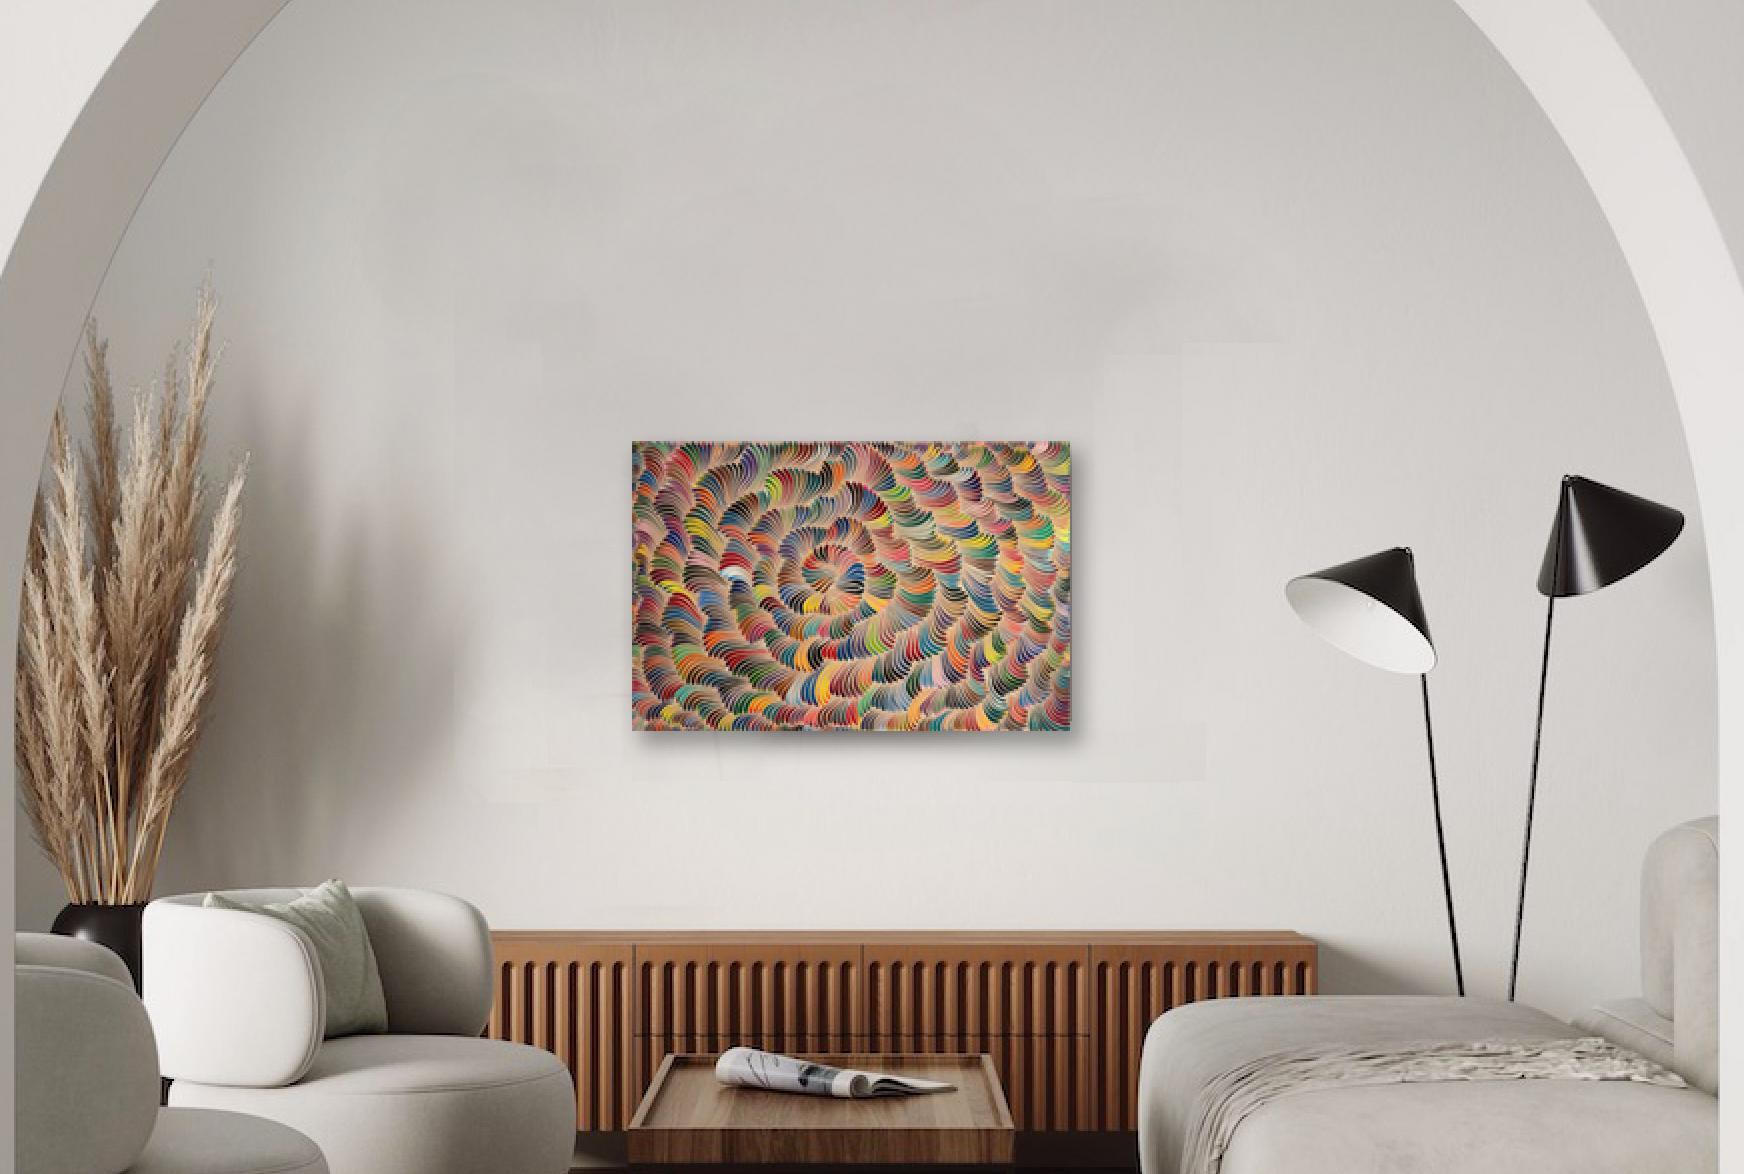 Tourbillons de couleurs contemporains, peinture abstraite vibrante inspirée de Keith Haring en vente 4